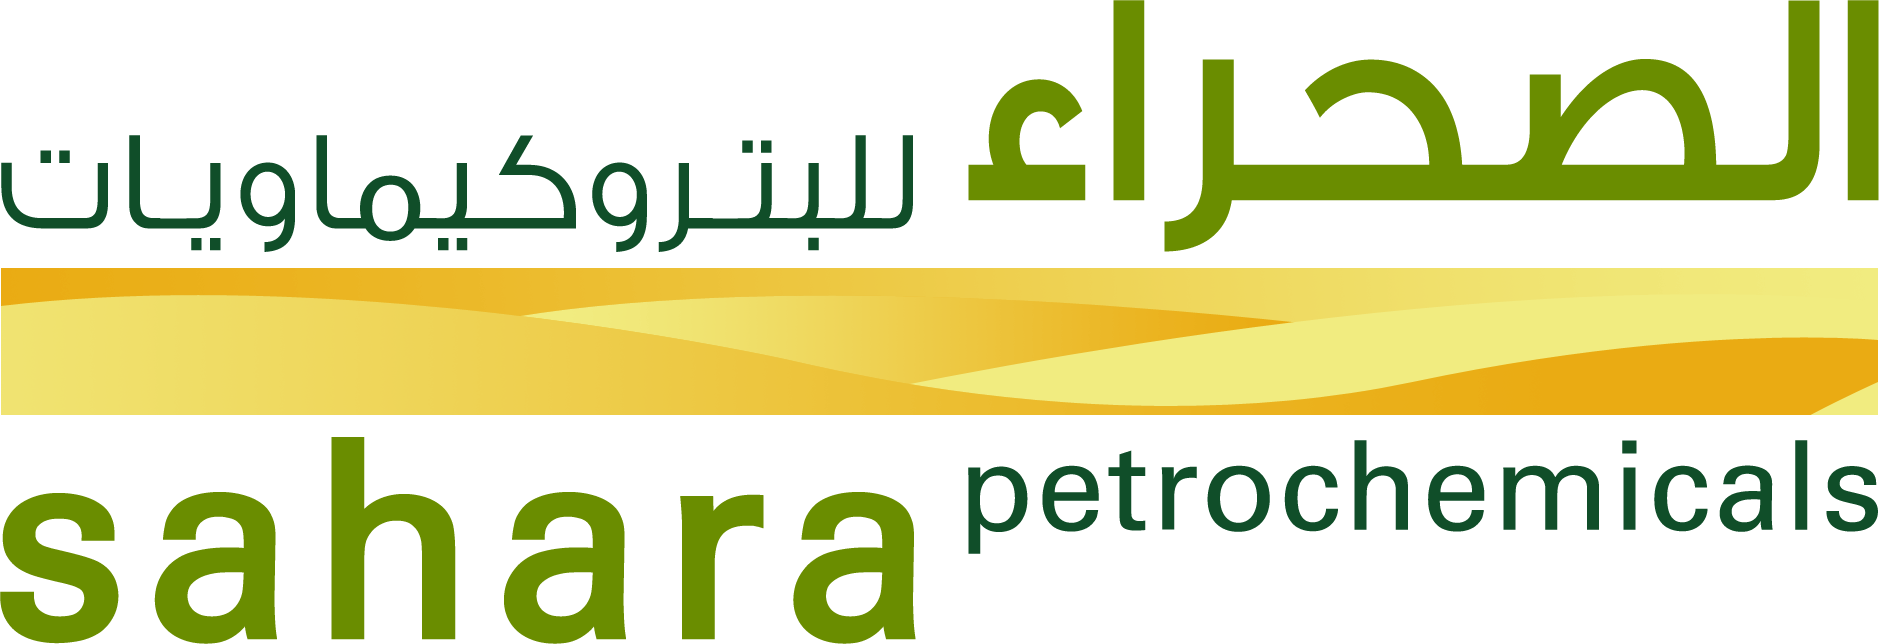 Petrochemical Company Logo - Sahara Petrochemicals Company | NrgEdge